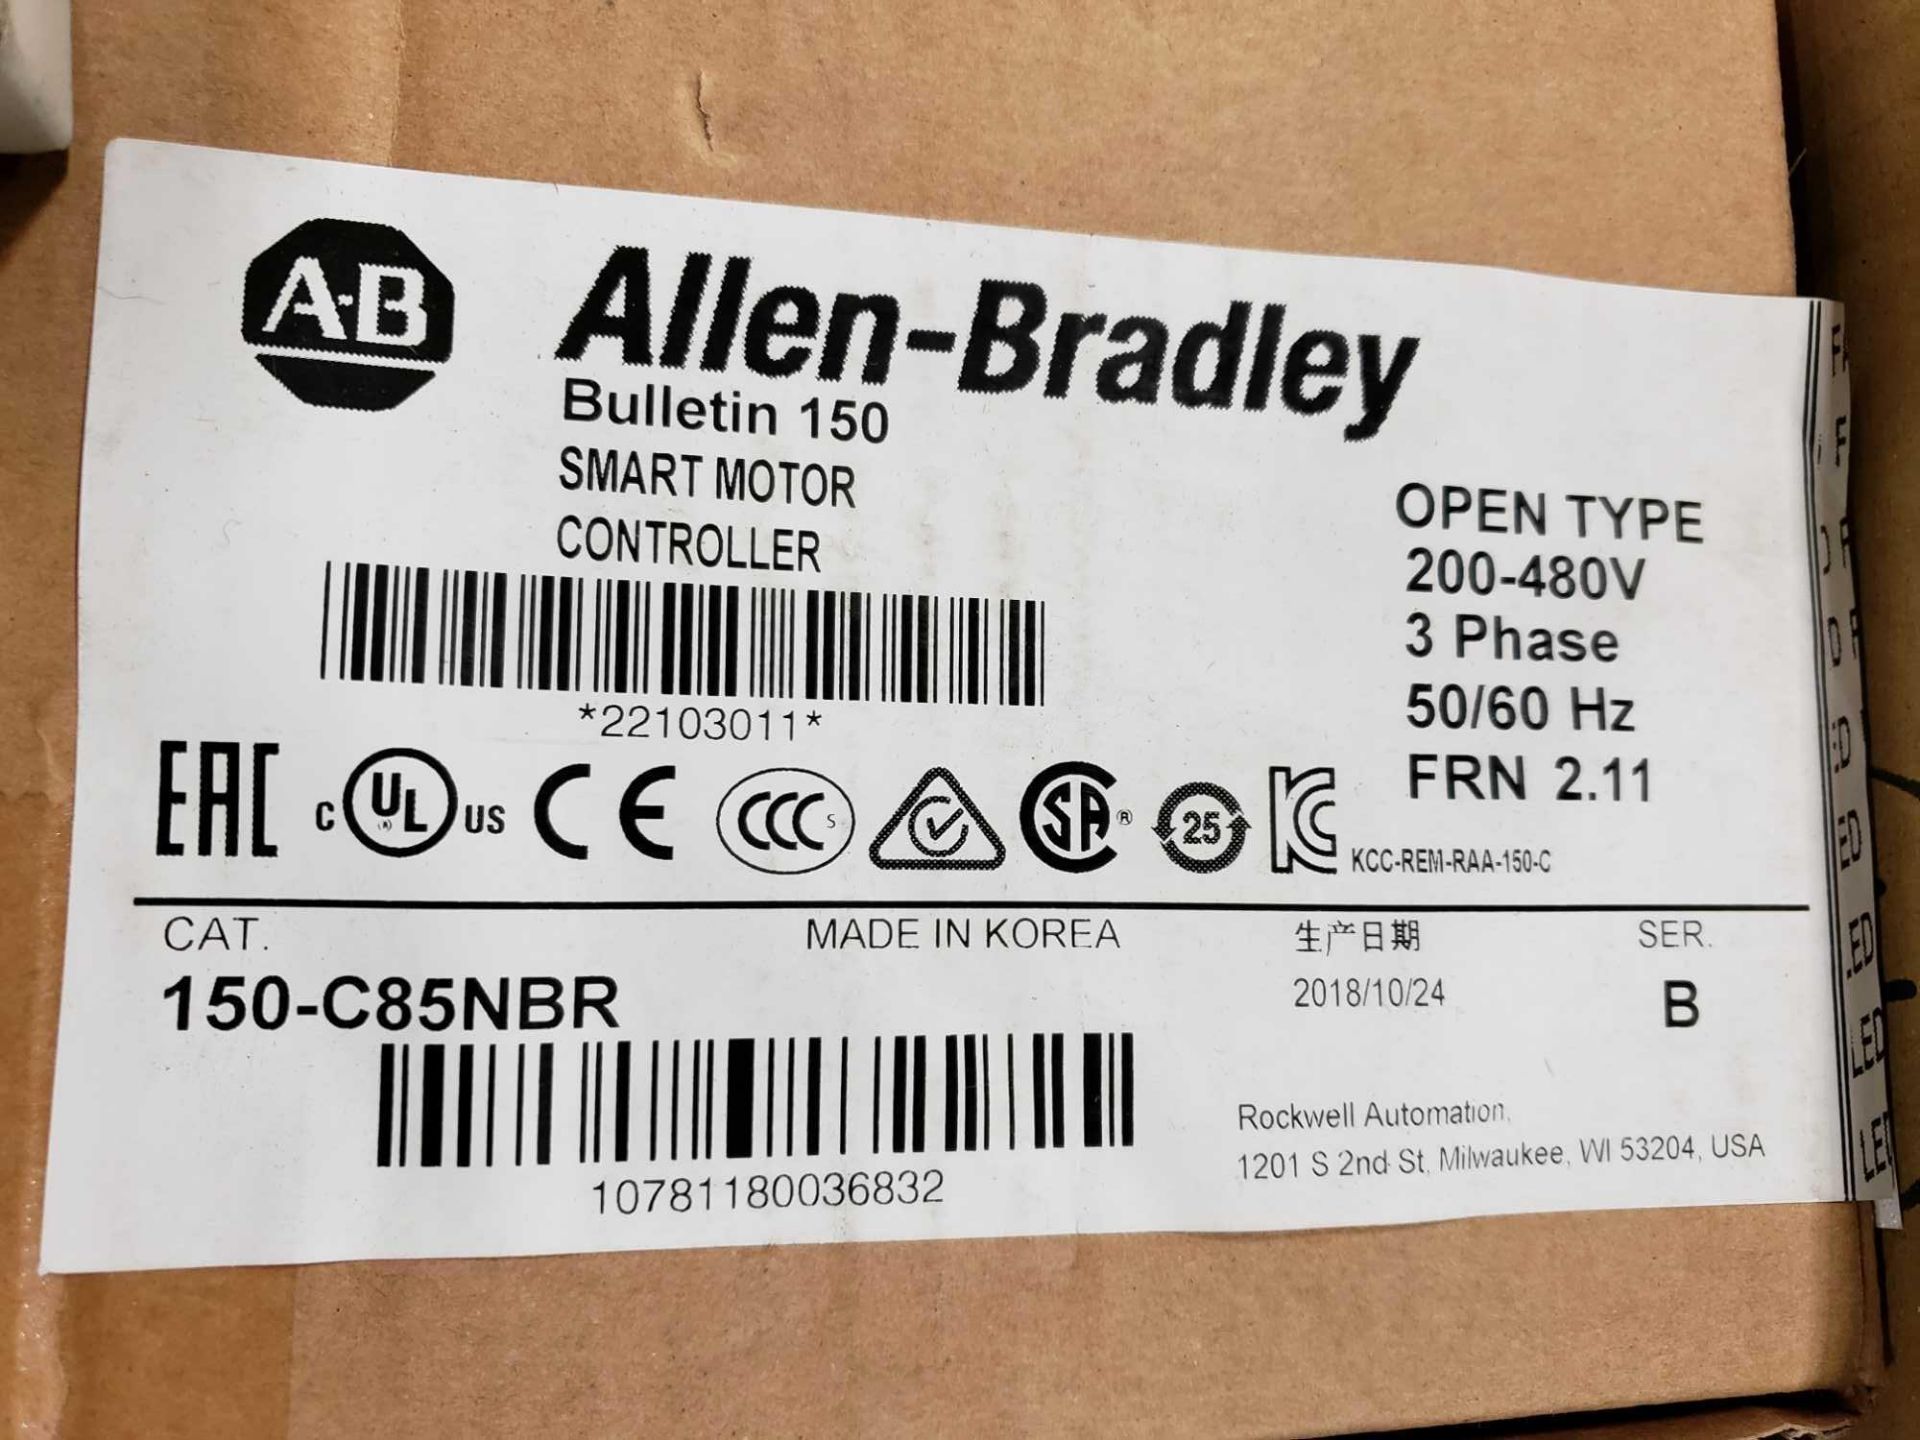 Allen Bradley smart controller catalog 150-C85NBR. New in box. - Image 3 of 3